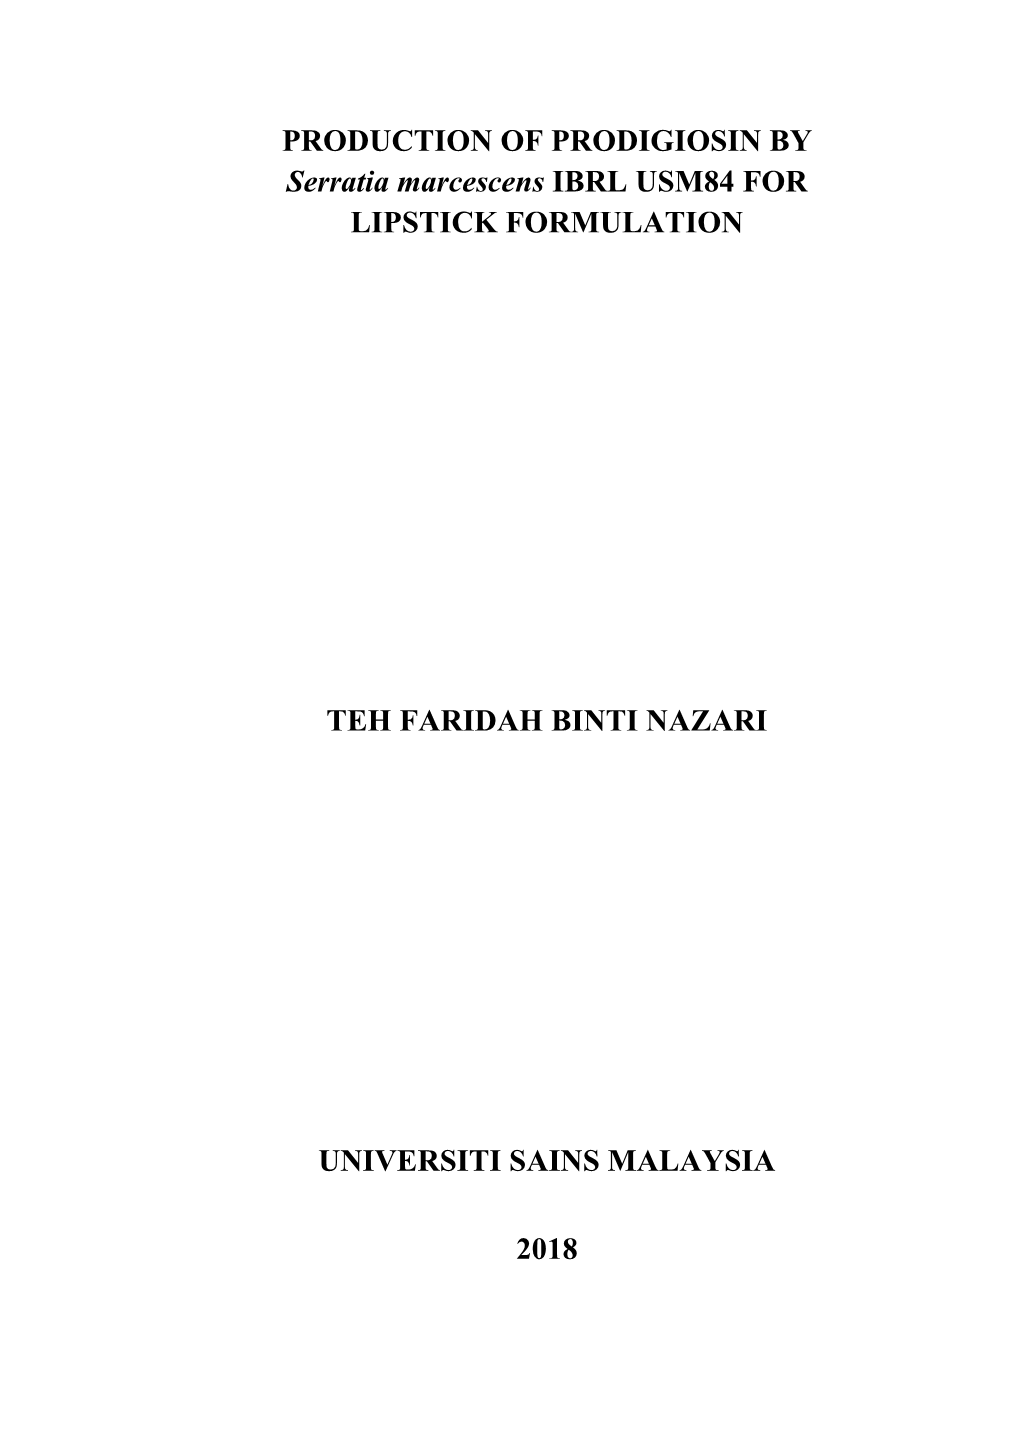 PRODUCTION of PRODIGIOSIN by Serratia Marcescens IBRL USM84 for LIPSTICK FORMULATION